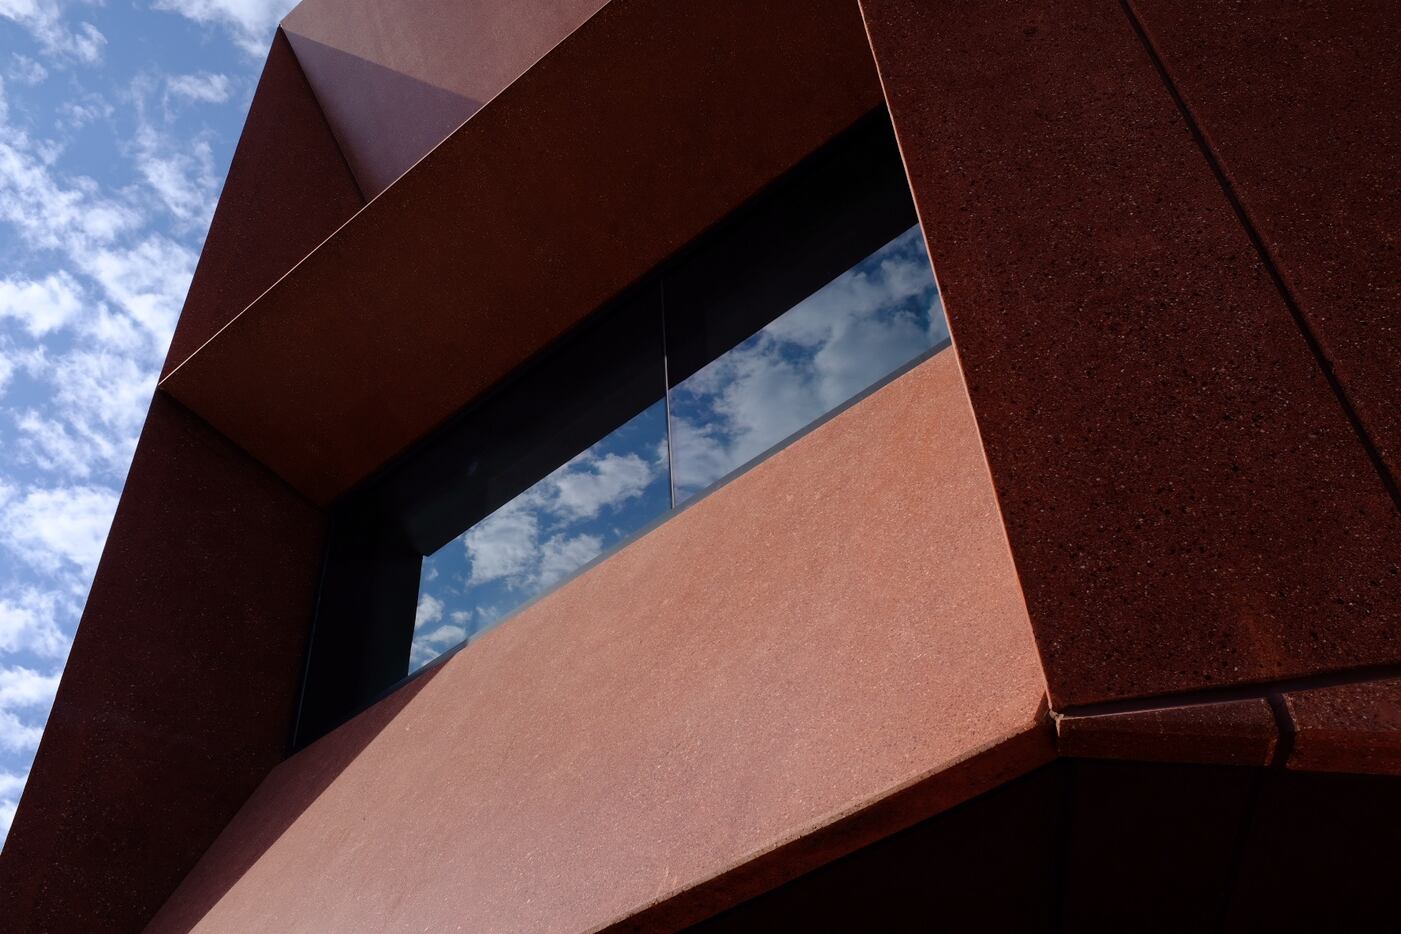 Shadows and reflections on the chiseled concrete block of Ruby City, David Adjaye, architect.